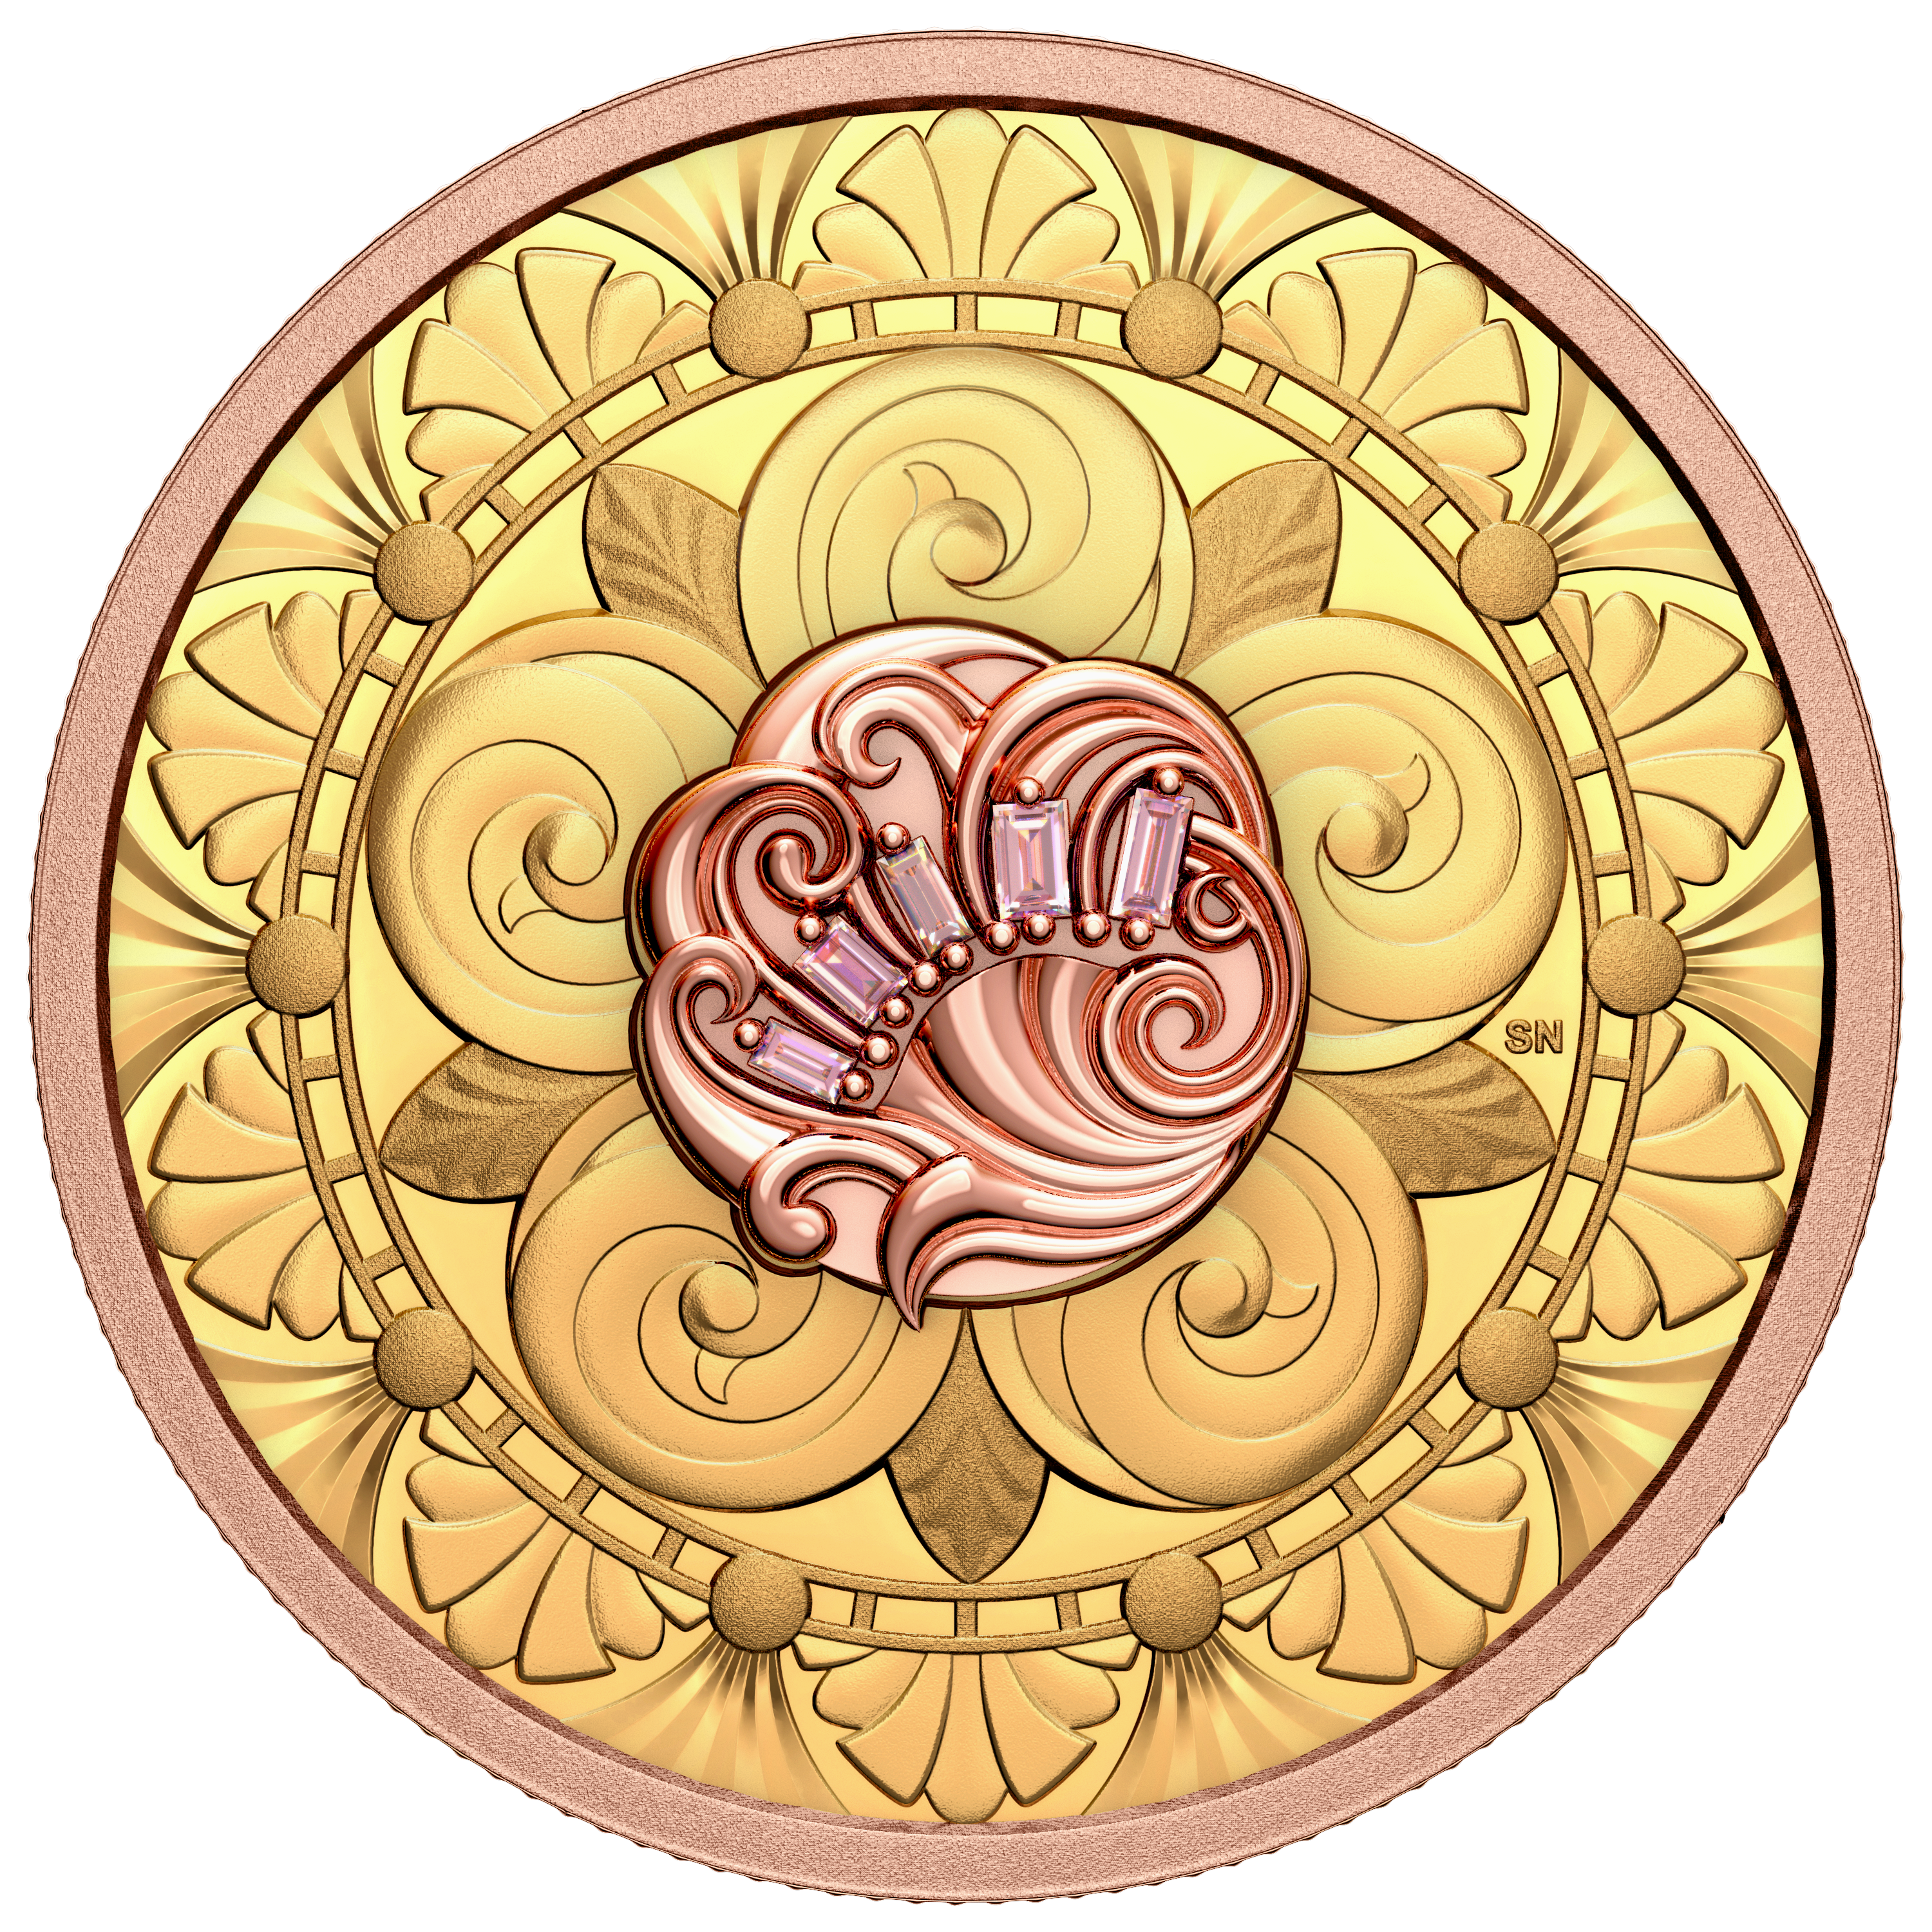 OPULENCE Treasure 1 Oz Pure Gold Pink Diamond Coin $200 Canada